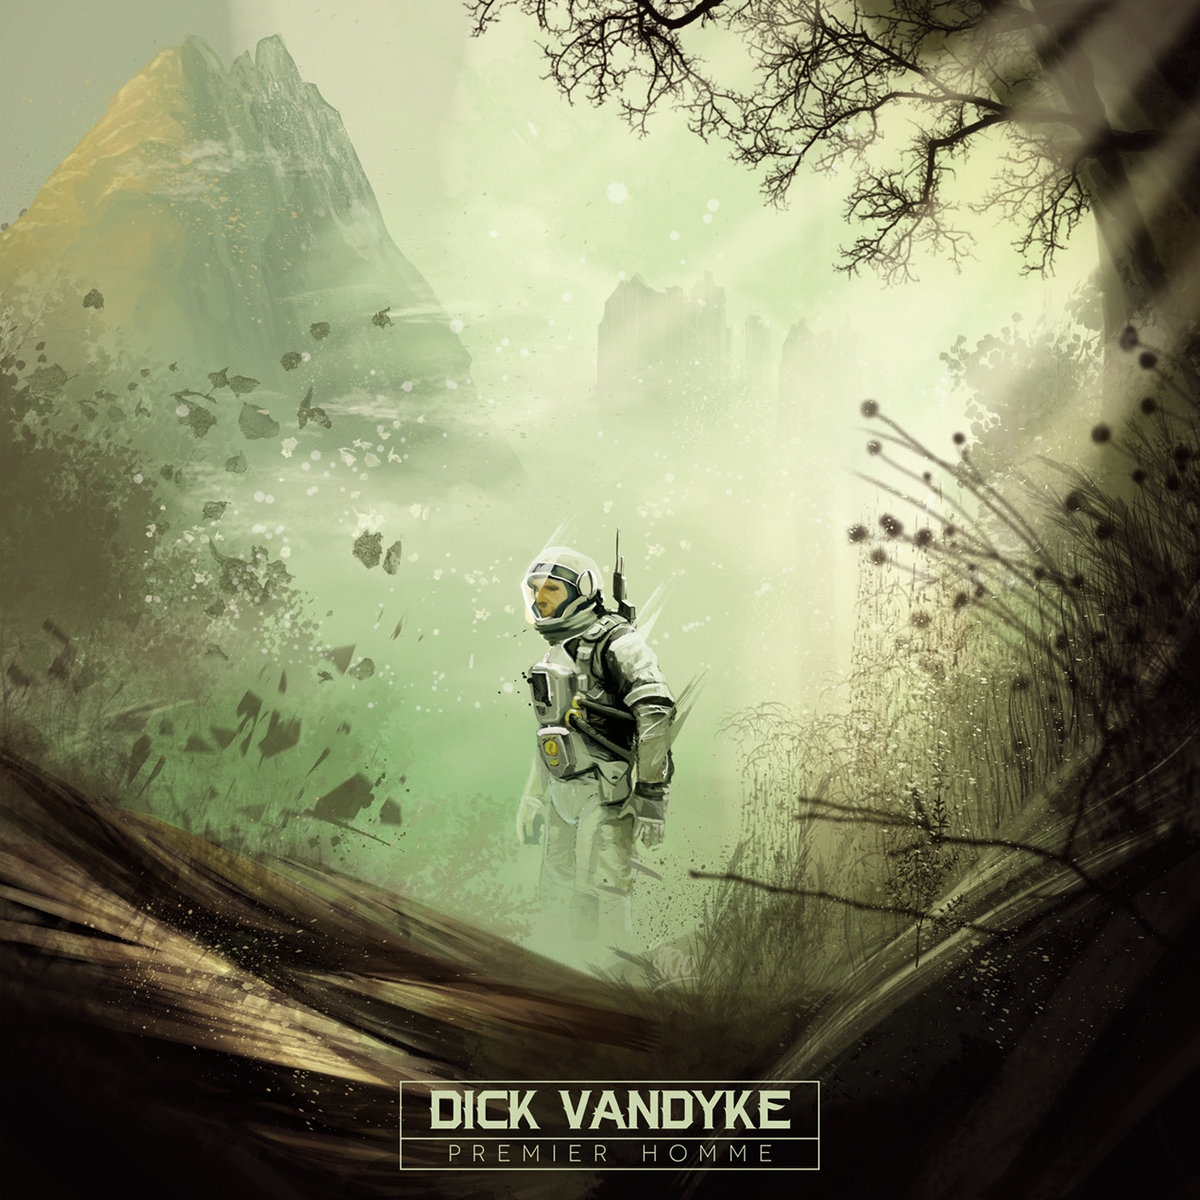 Album Cd "Dick Vandyke - Premier homme" de dick vandyke sur Scredboutique.com